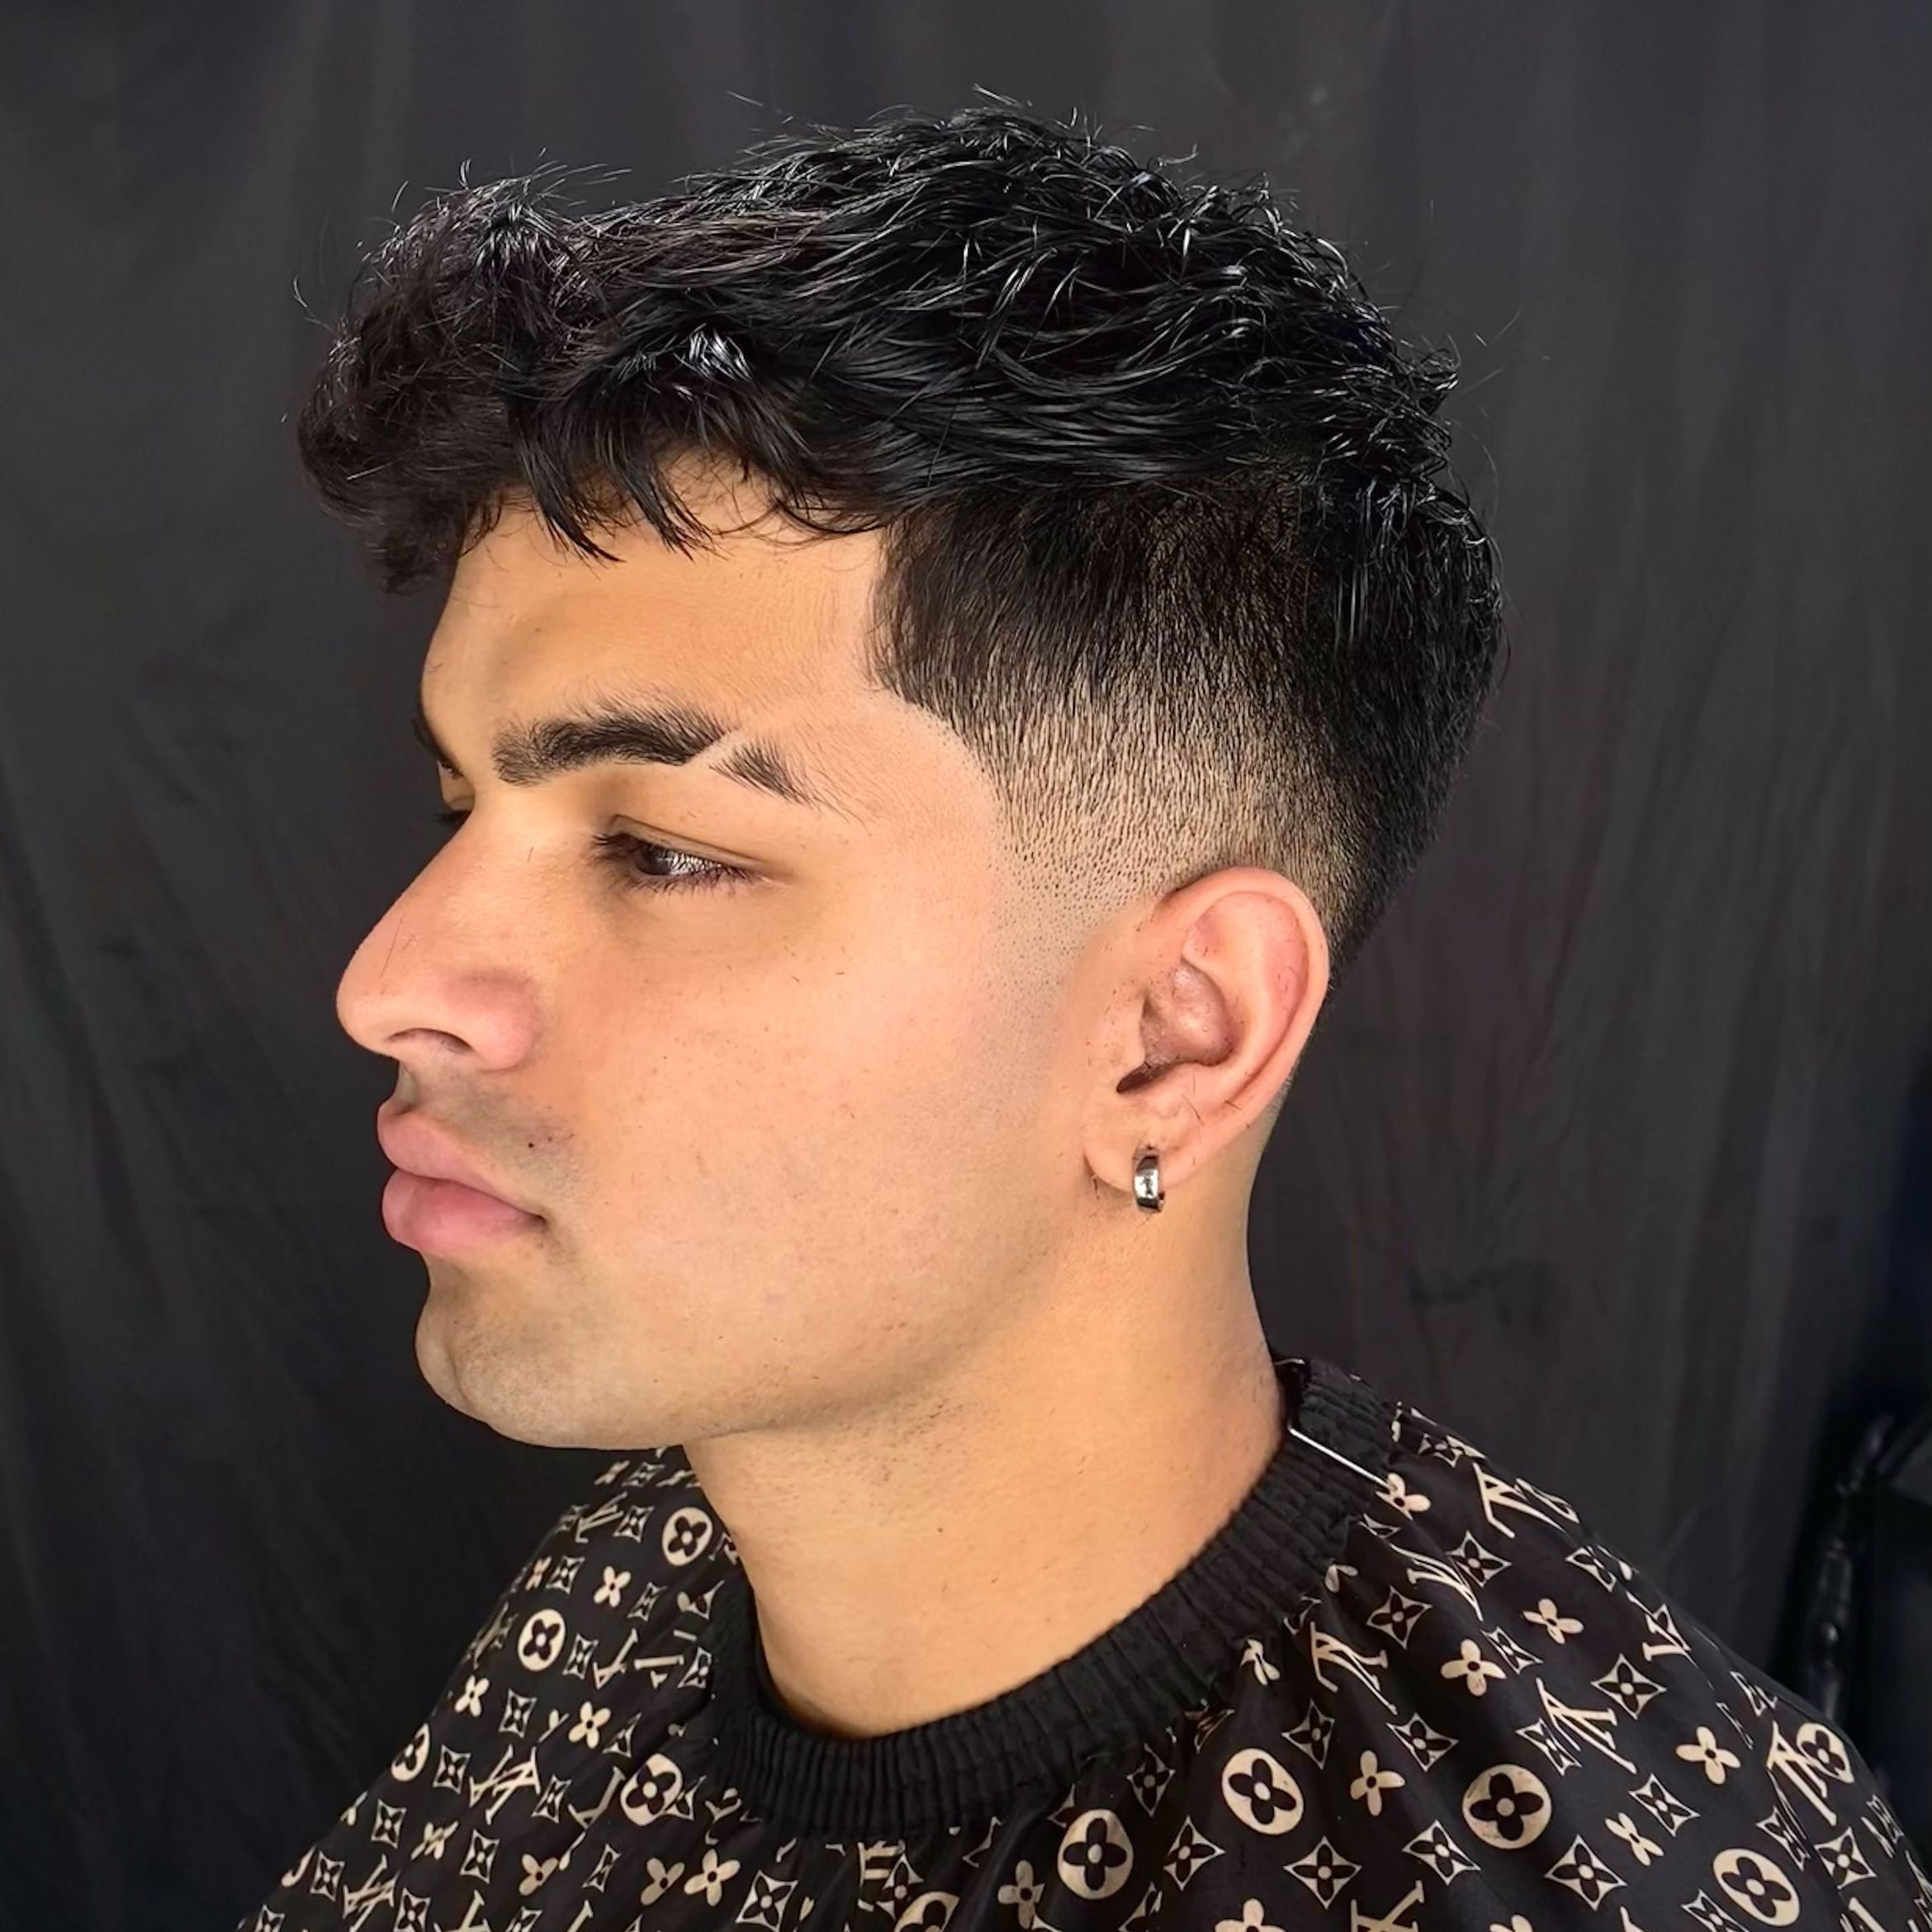 Haircut + Eyebrows portfolio